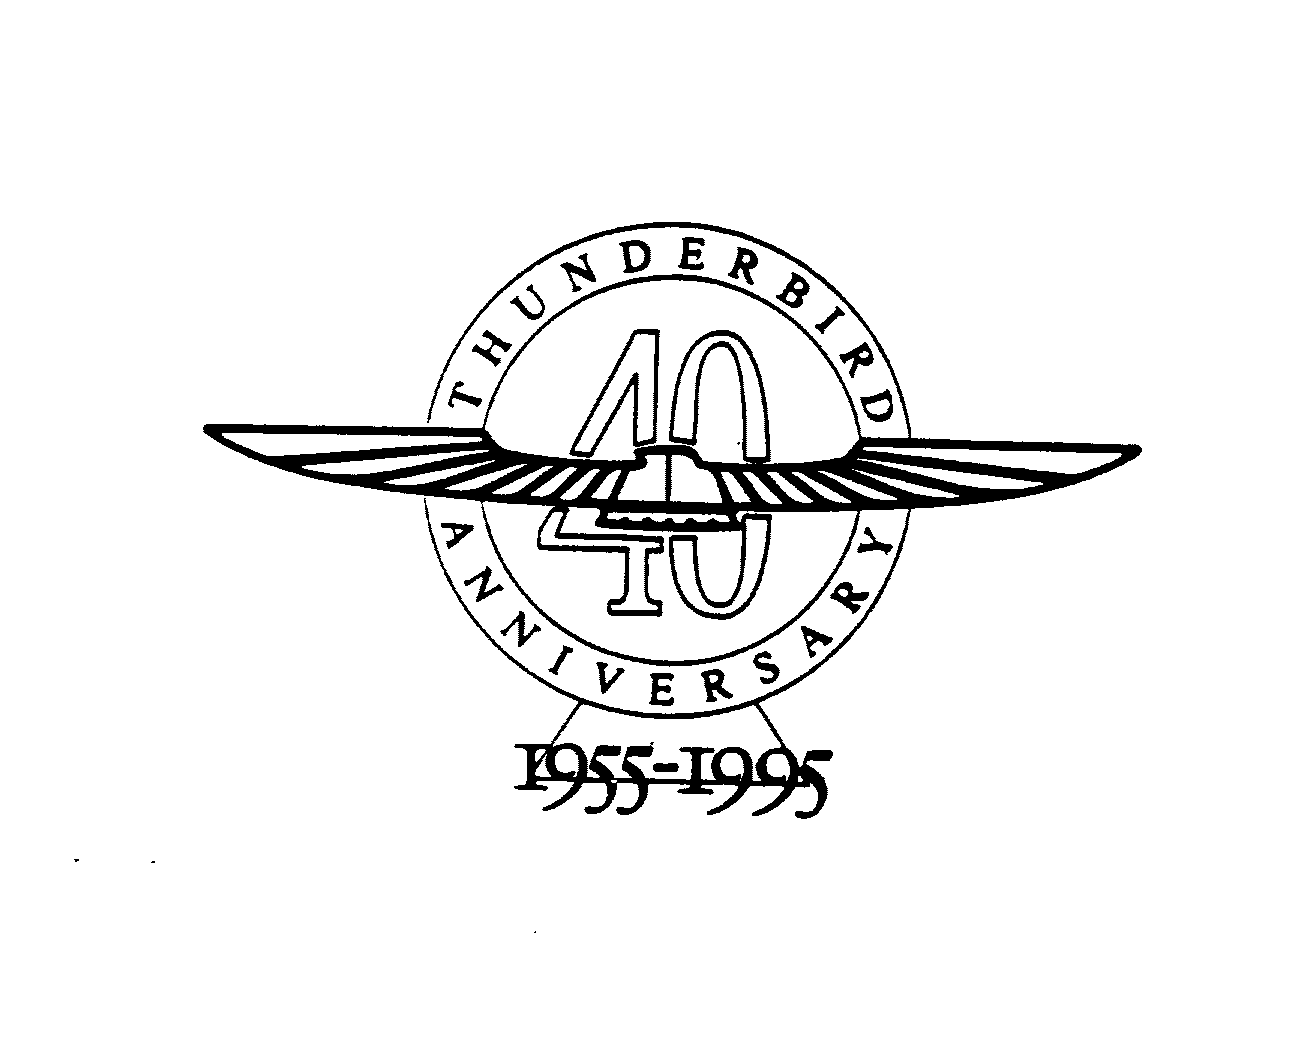  THUNDERBIRD 40 ANNIVERSARY 1955-1995